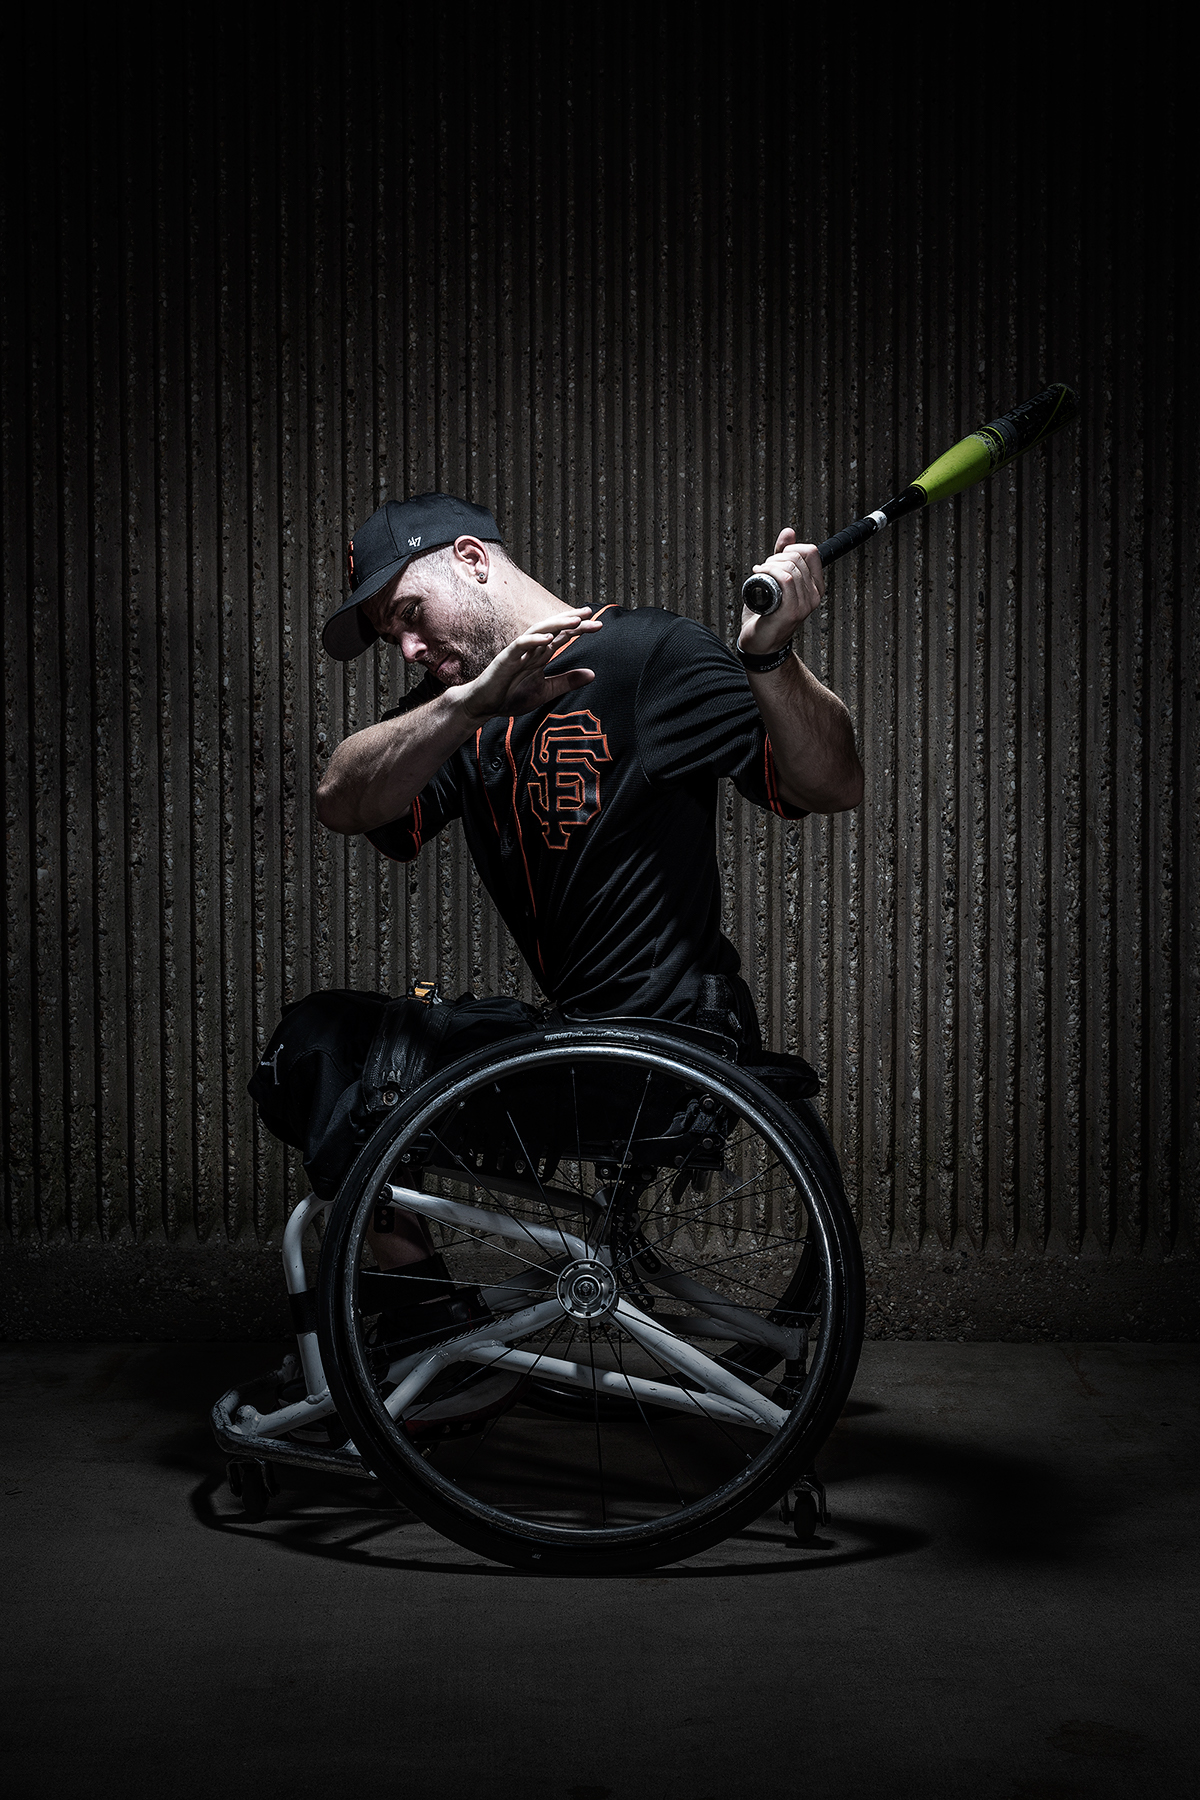 softball portraits awesome cool Fun athletes disablility wheelchair gritty dark